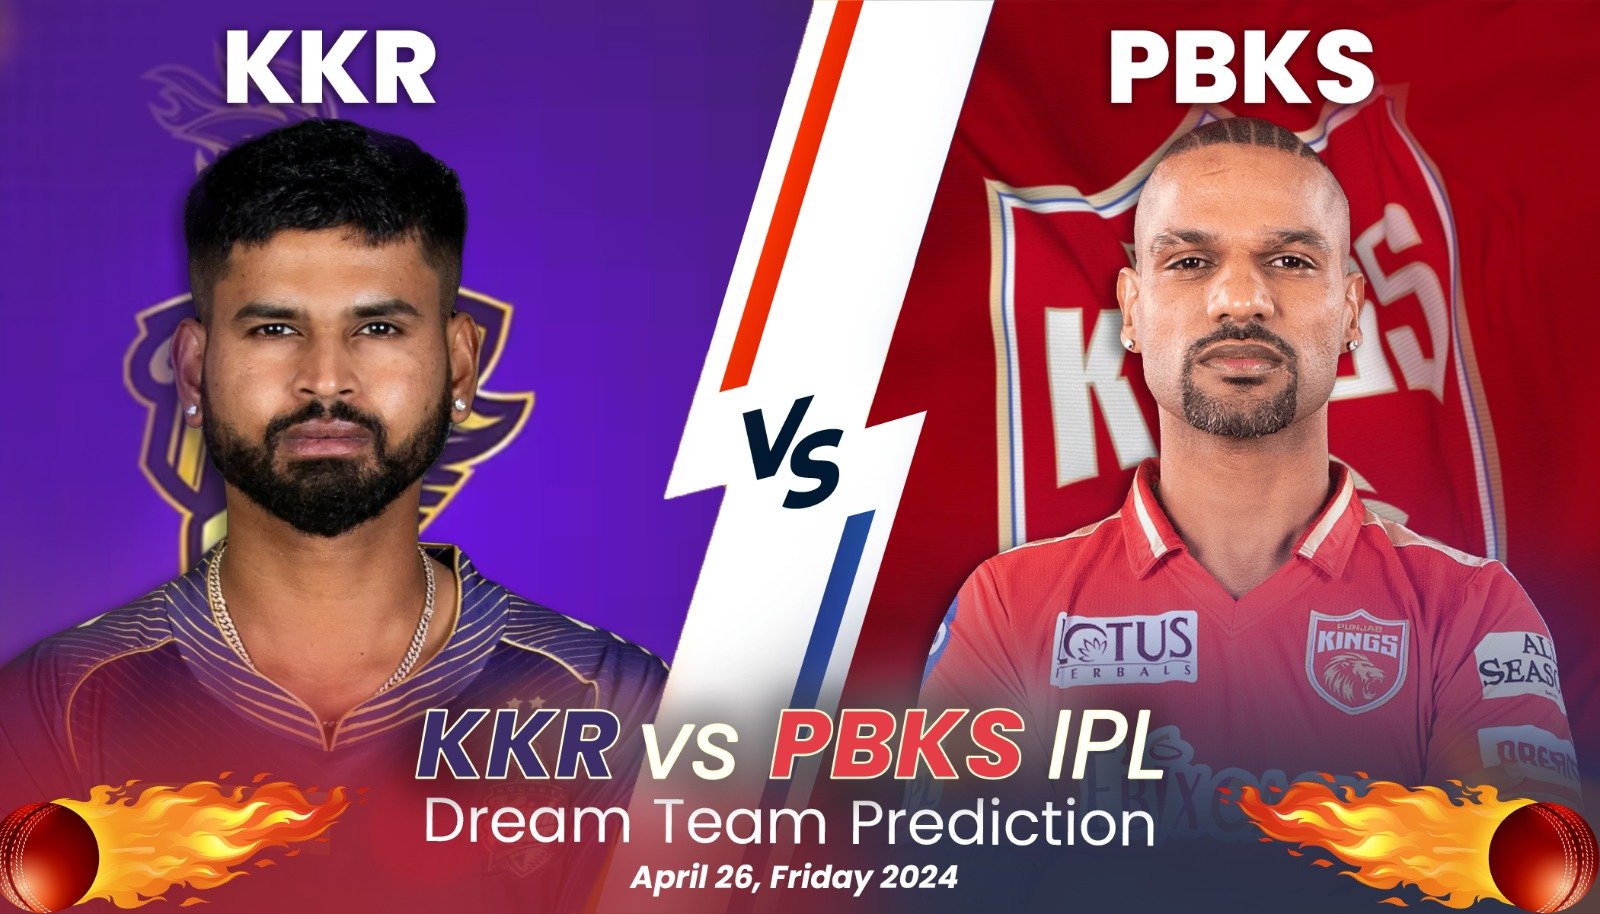 KKR vs PBKS IPL Dream11 Prediction 2024 by LetMeAnalyze